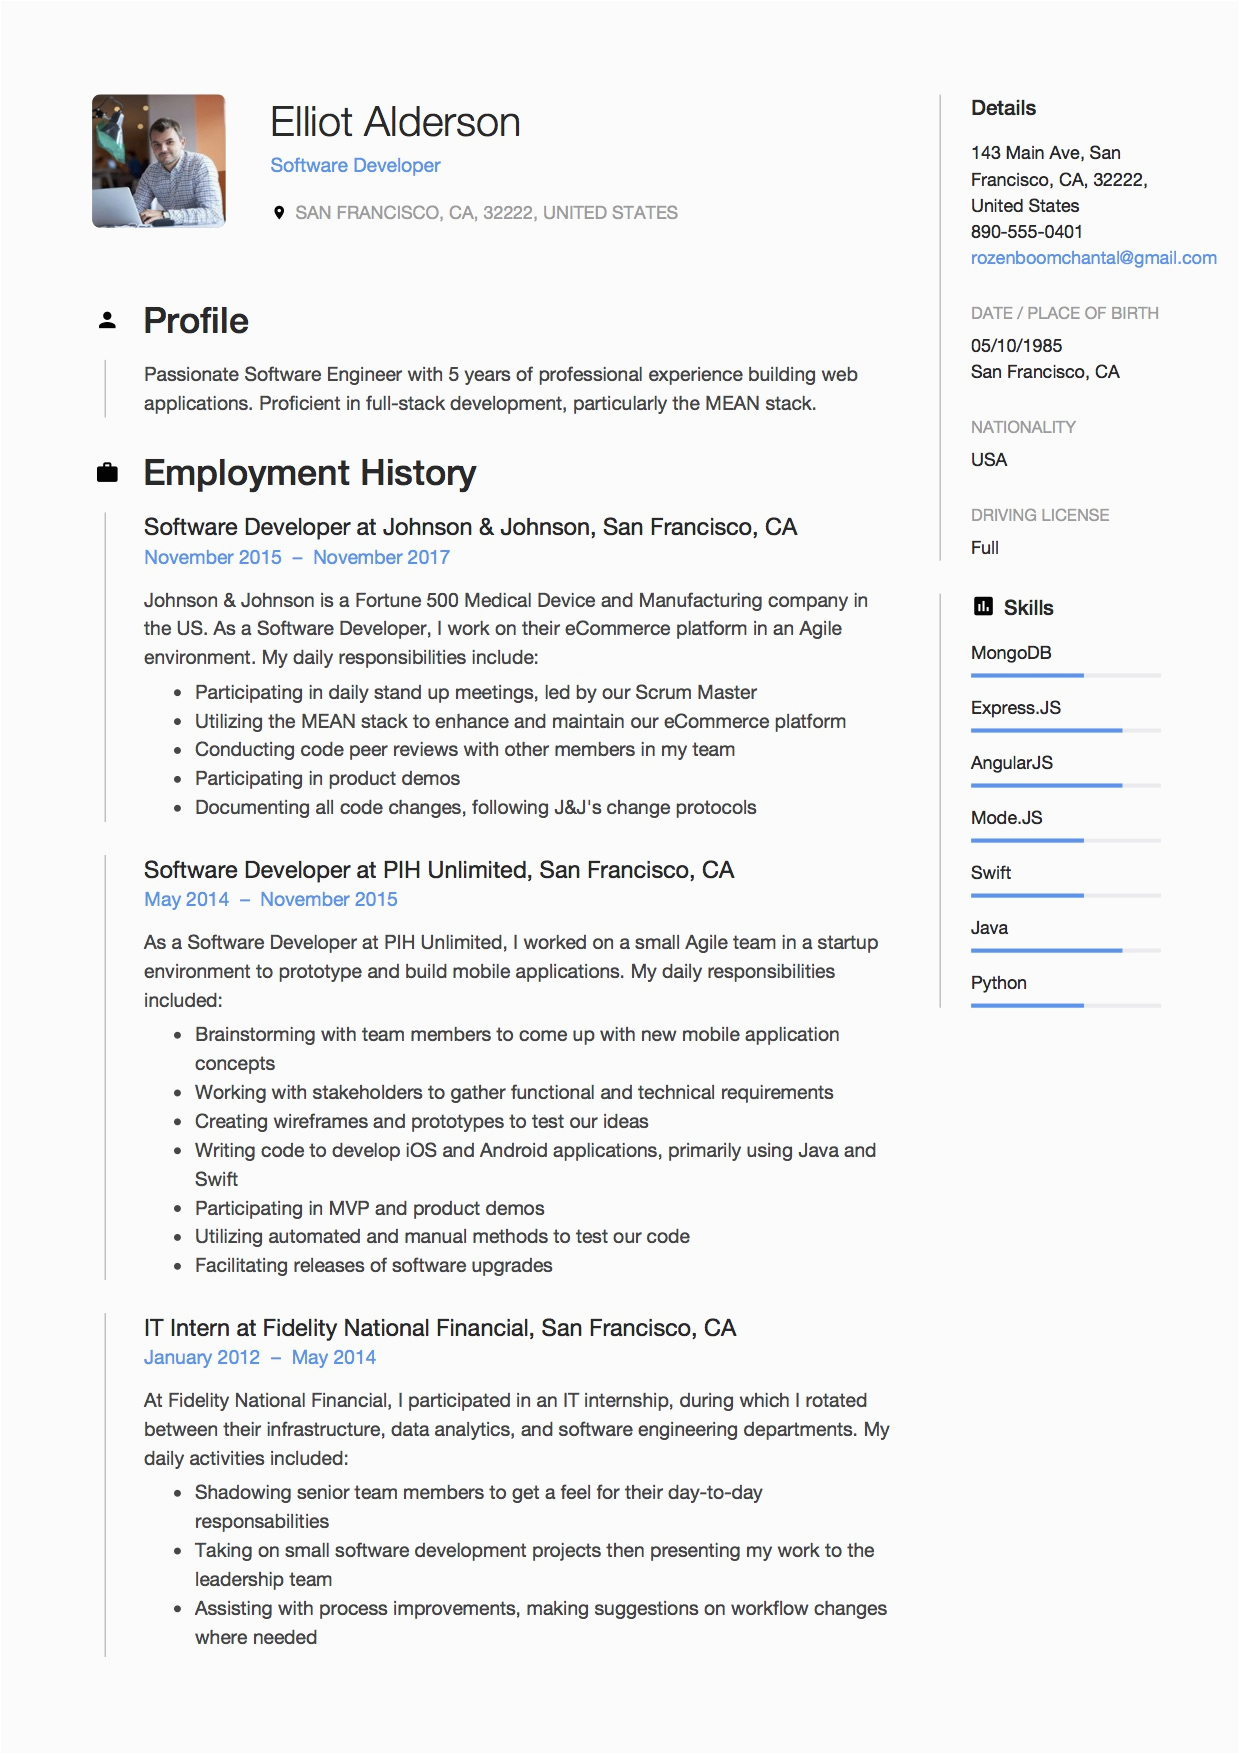 Software Developer Resume Samples In United States Guide software Developer Resume [ 12 Samples] Word & Pdf